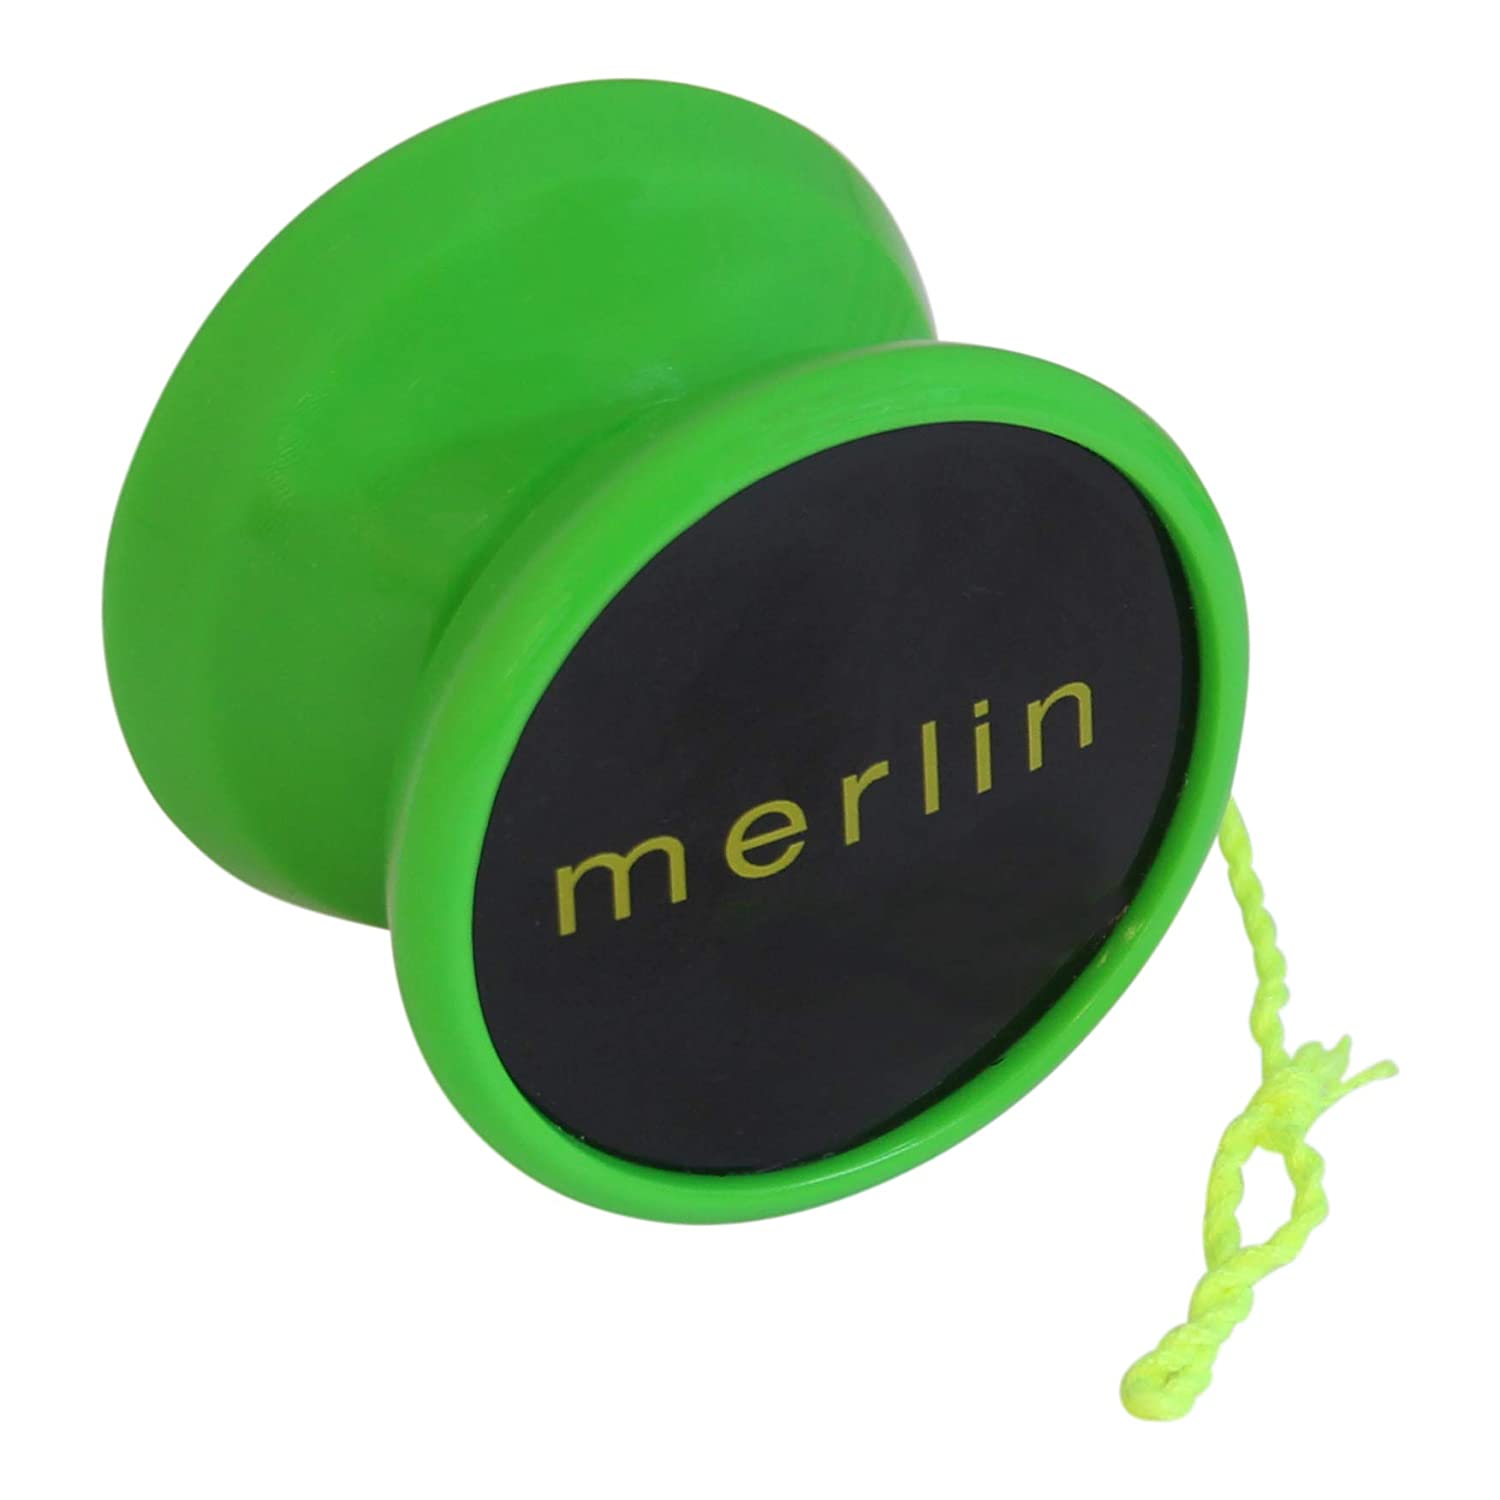 Yoyo King Green Merlin Professional Responsive Yoyo with Narrow C Bearing and Extra String